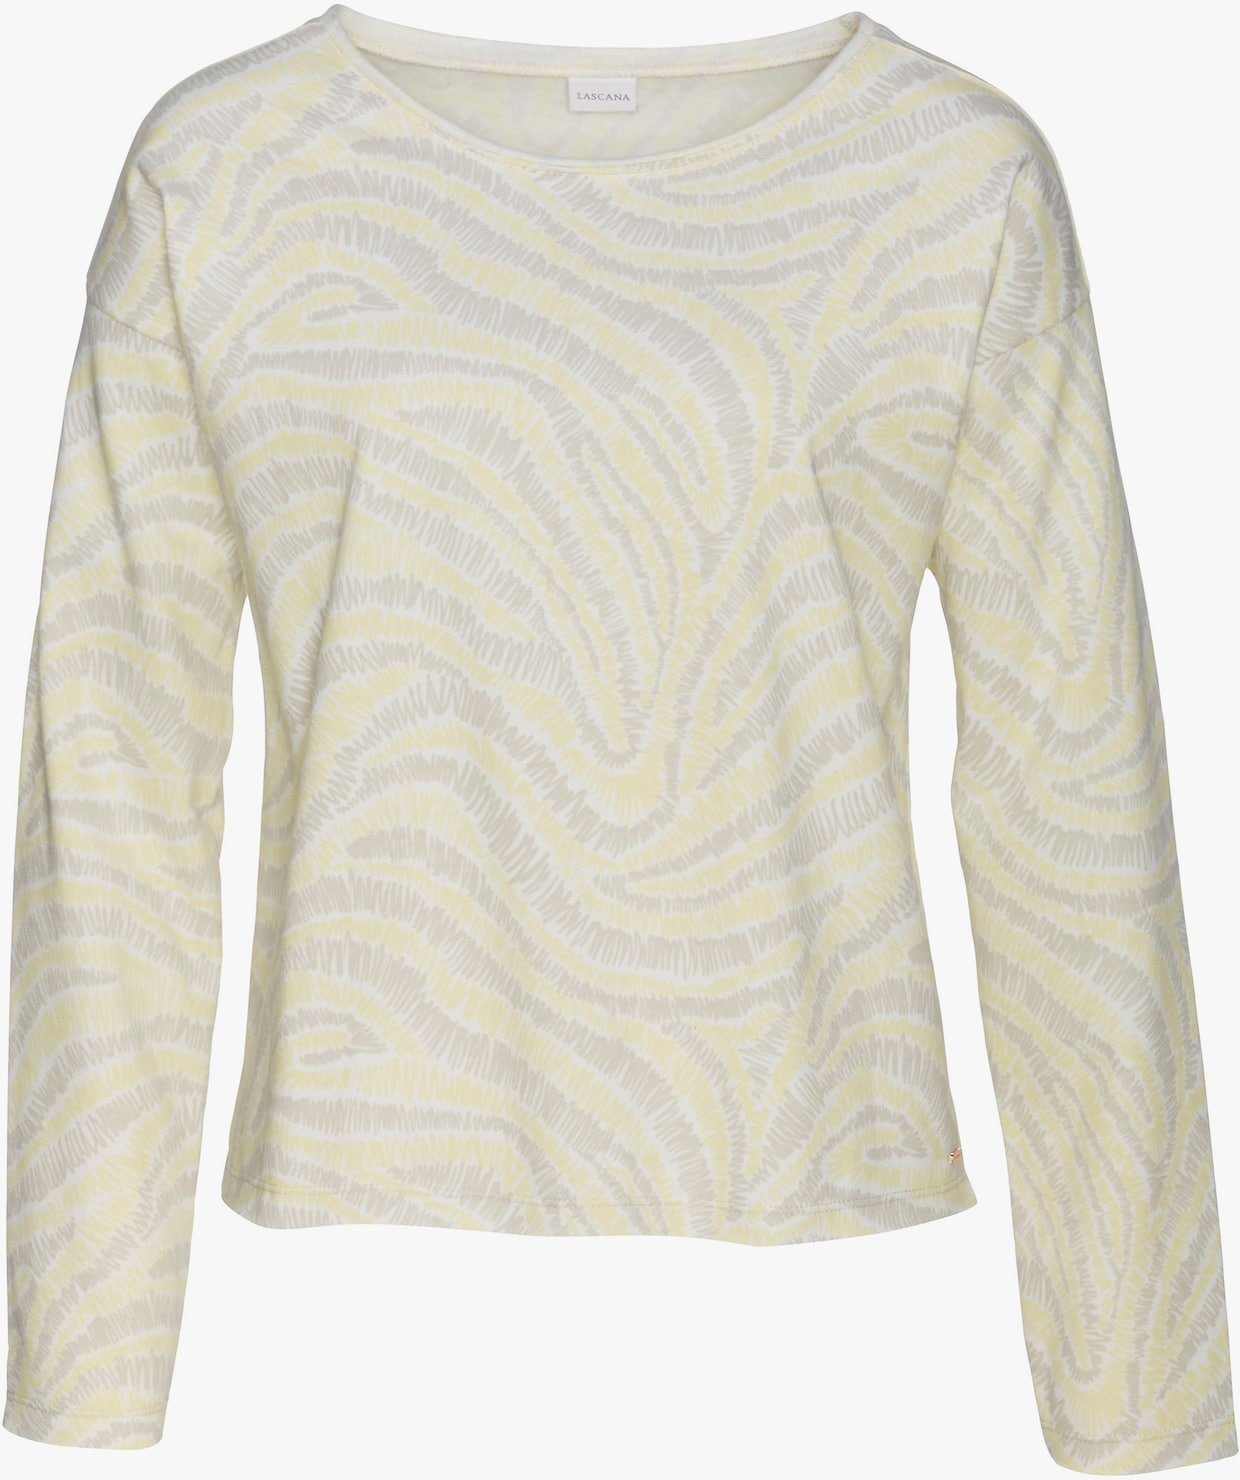 LASCANA Sweatshirt - lichtgeel/lichtgrijs gedessineerd